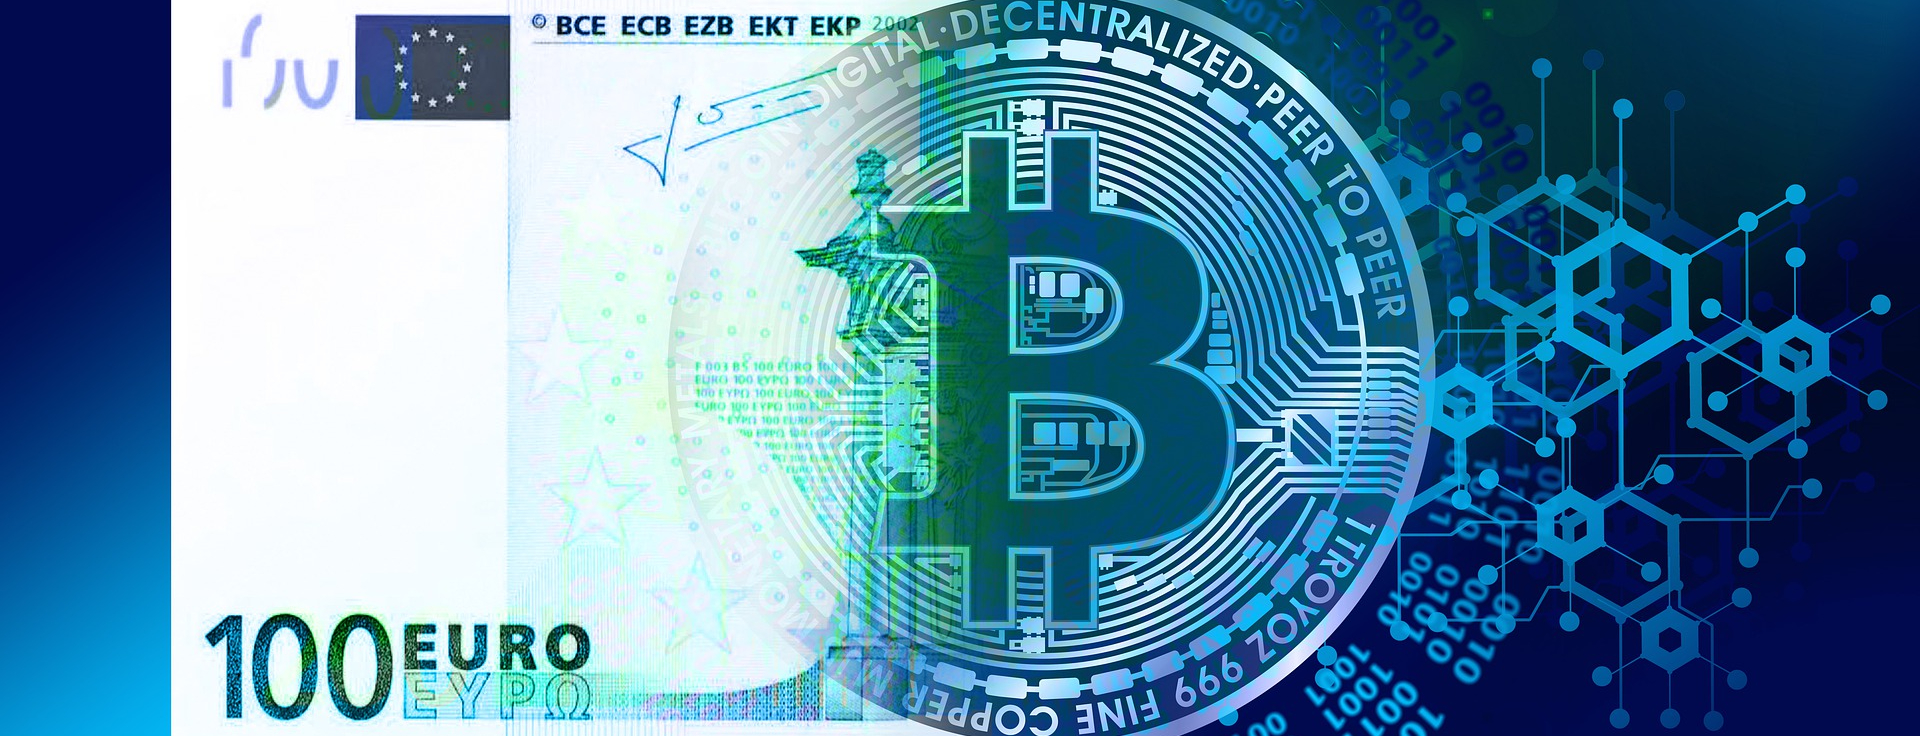 Blog: Euro and Bitcoin as Monetary Systems